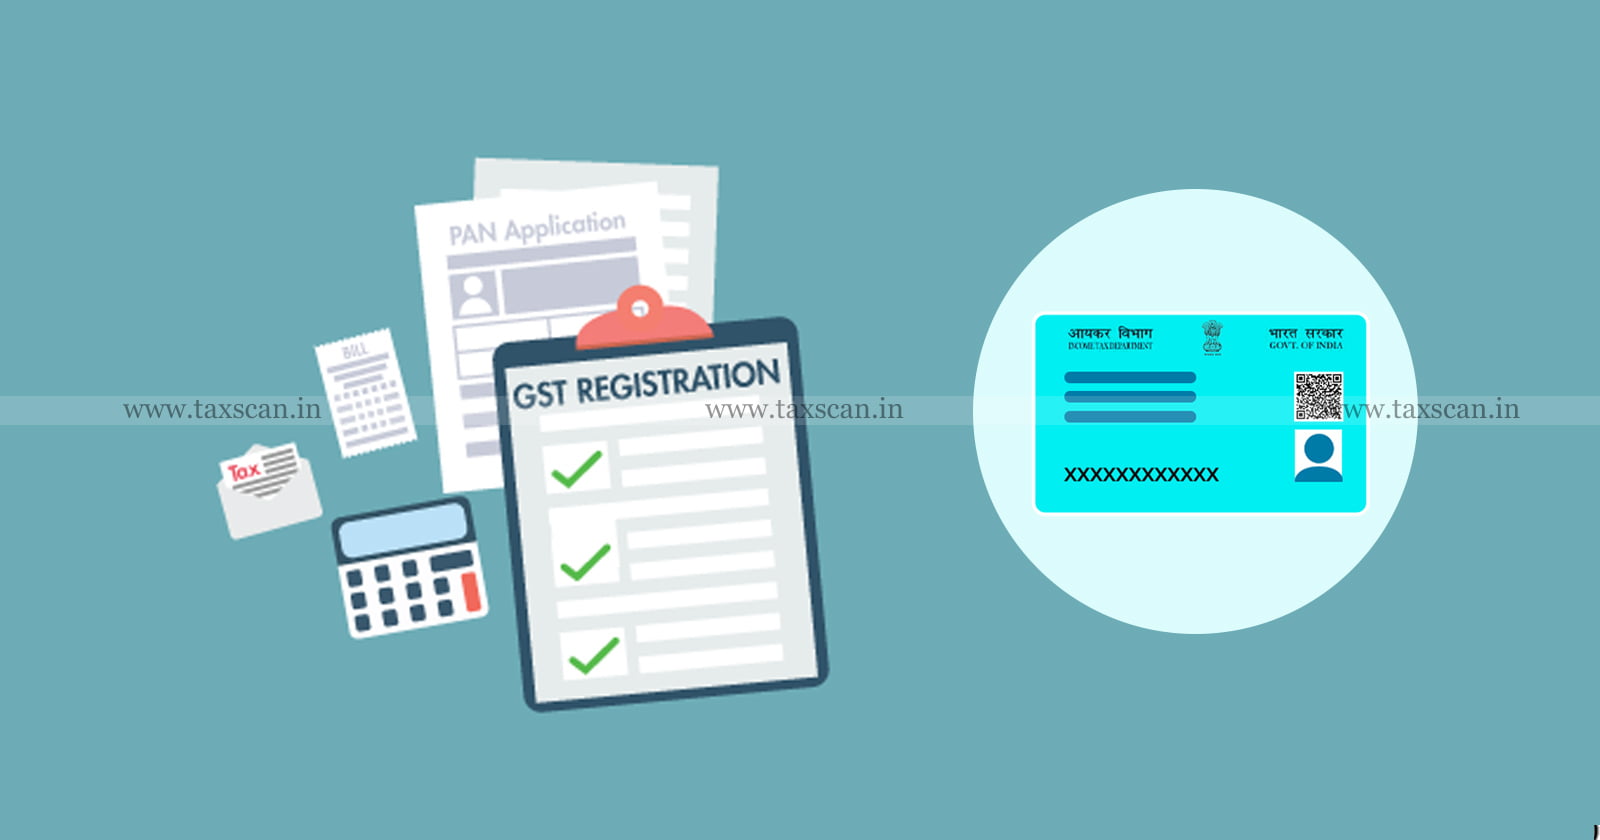 linked mobile - PAN - Email - Biometric Authentication - GST Registration - GST Council - GST - taxscan